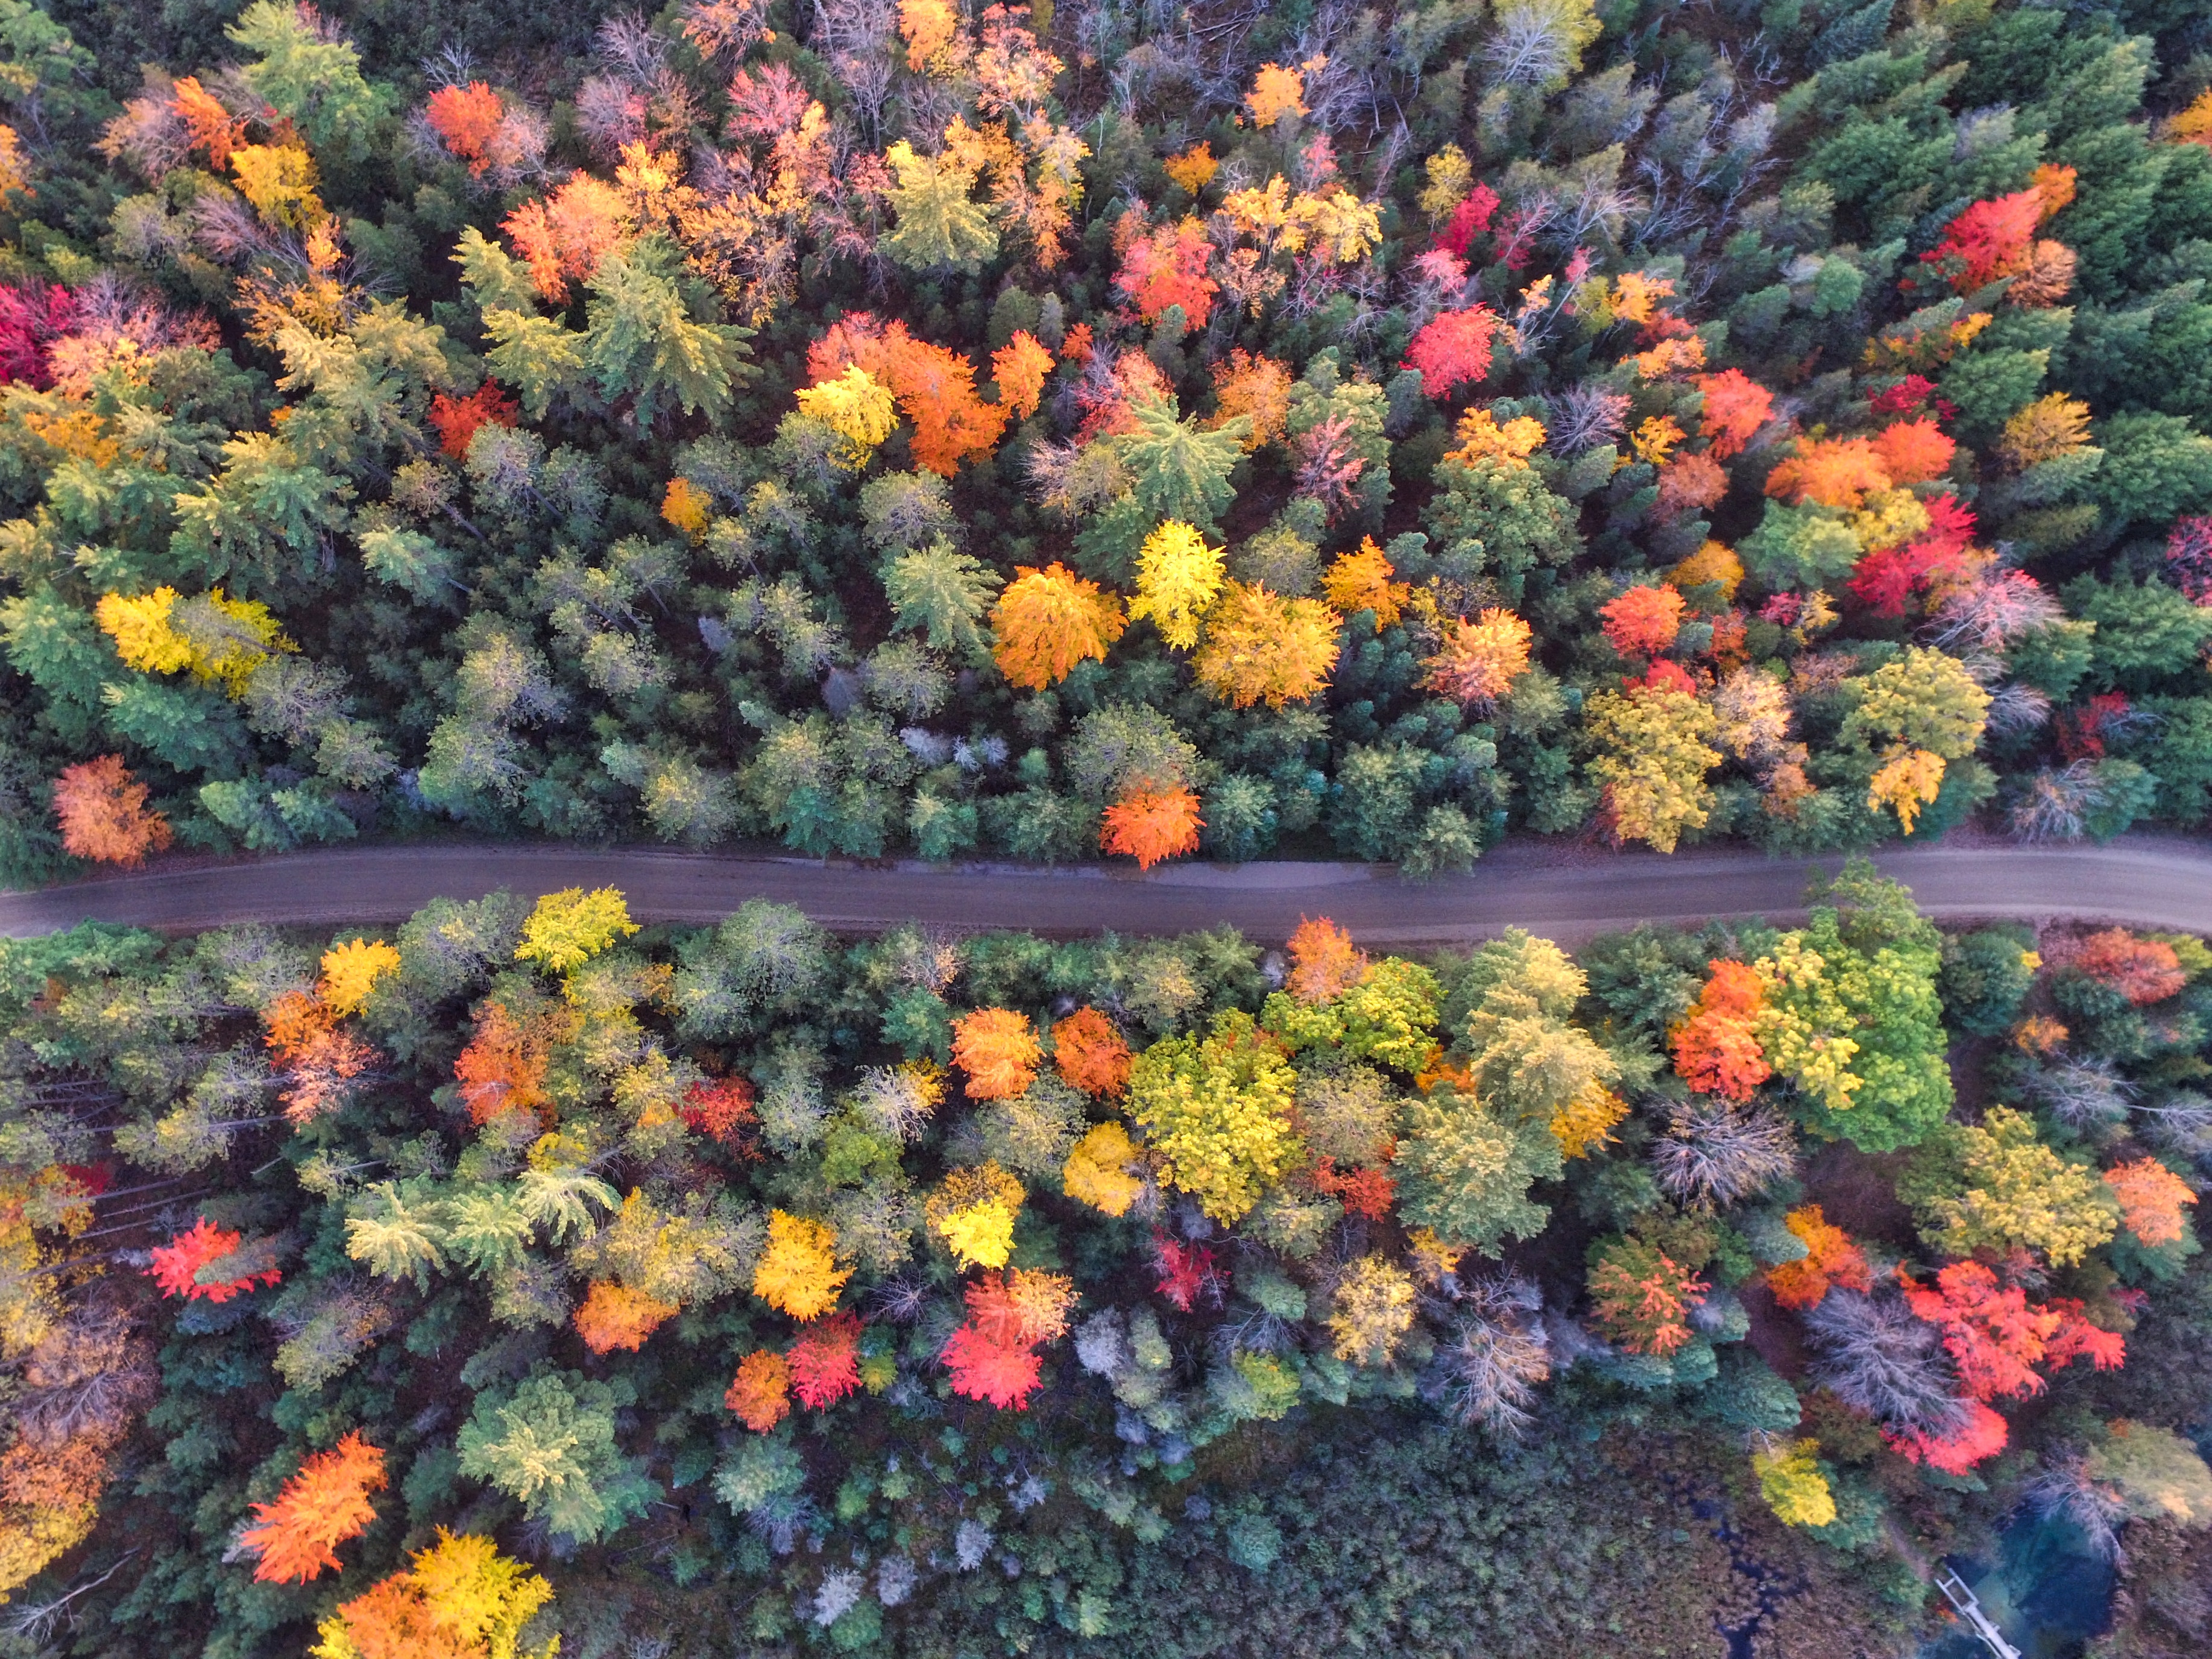 Photo of autumnal trees around road by Aaron Burden on Unsplash